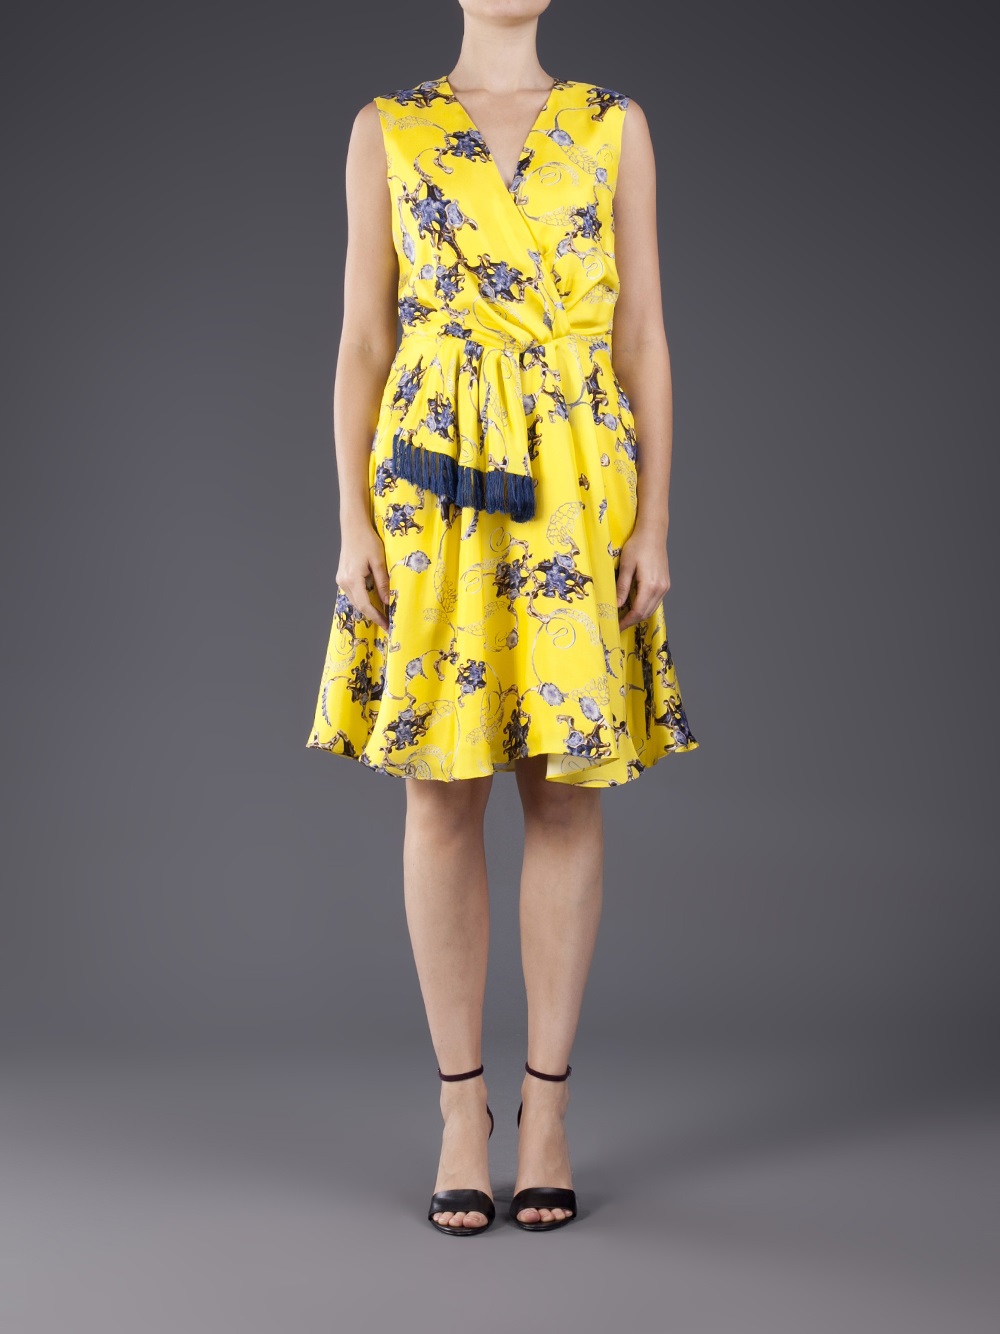 Lyst - Altuzarra Sleeveless Deco Print Dress in Yellow